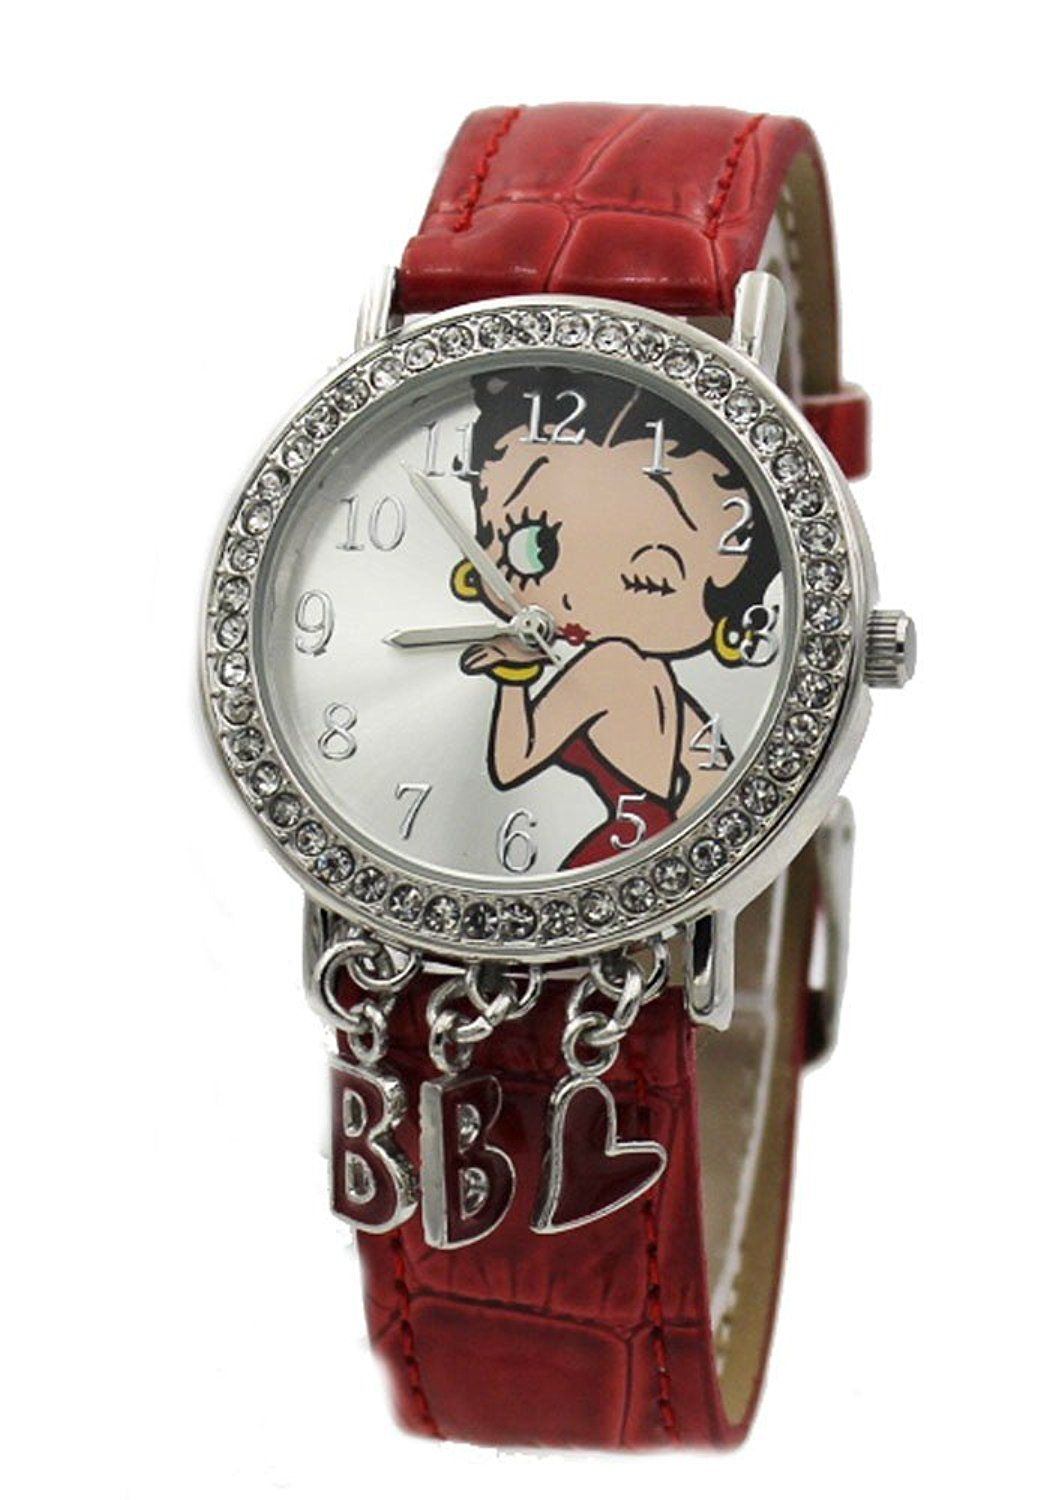 Betty boob red watch band